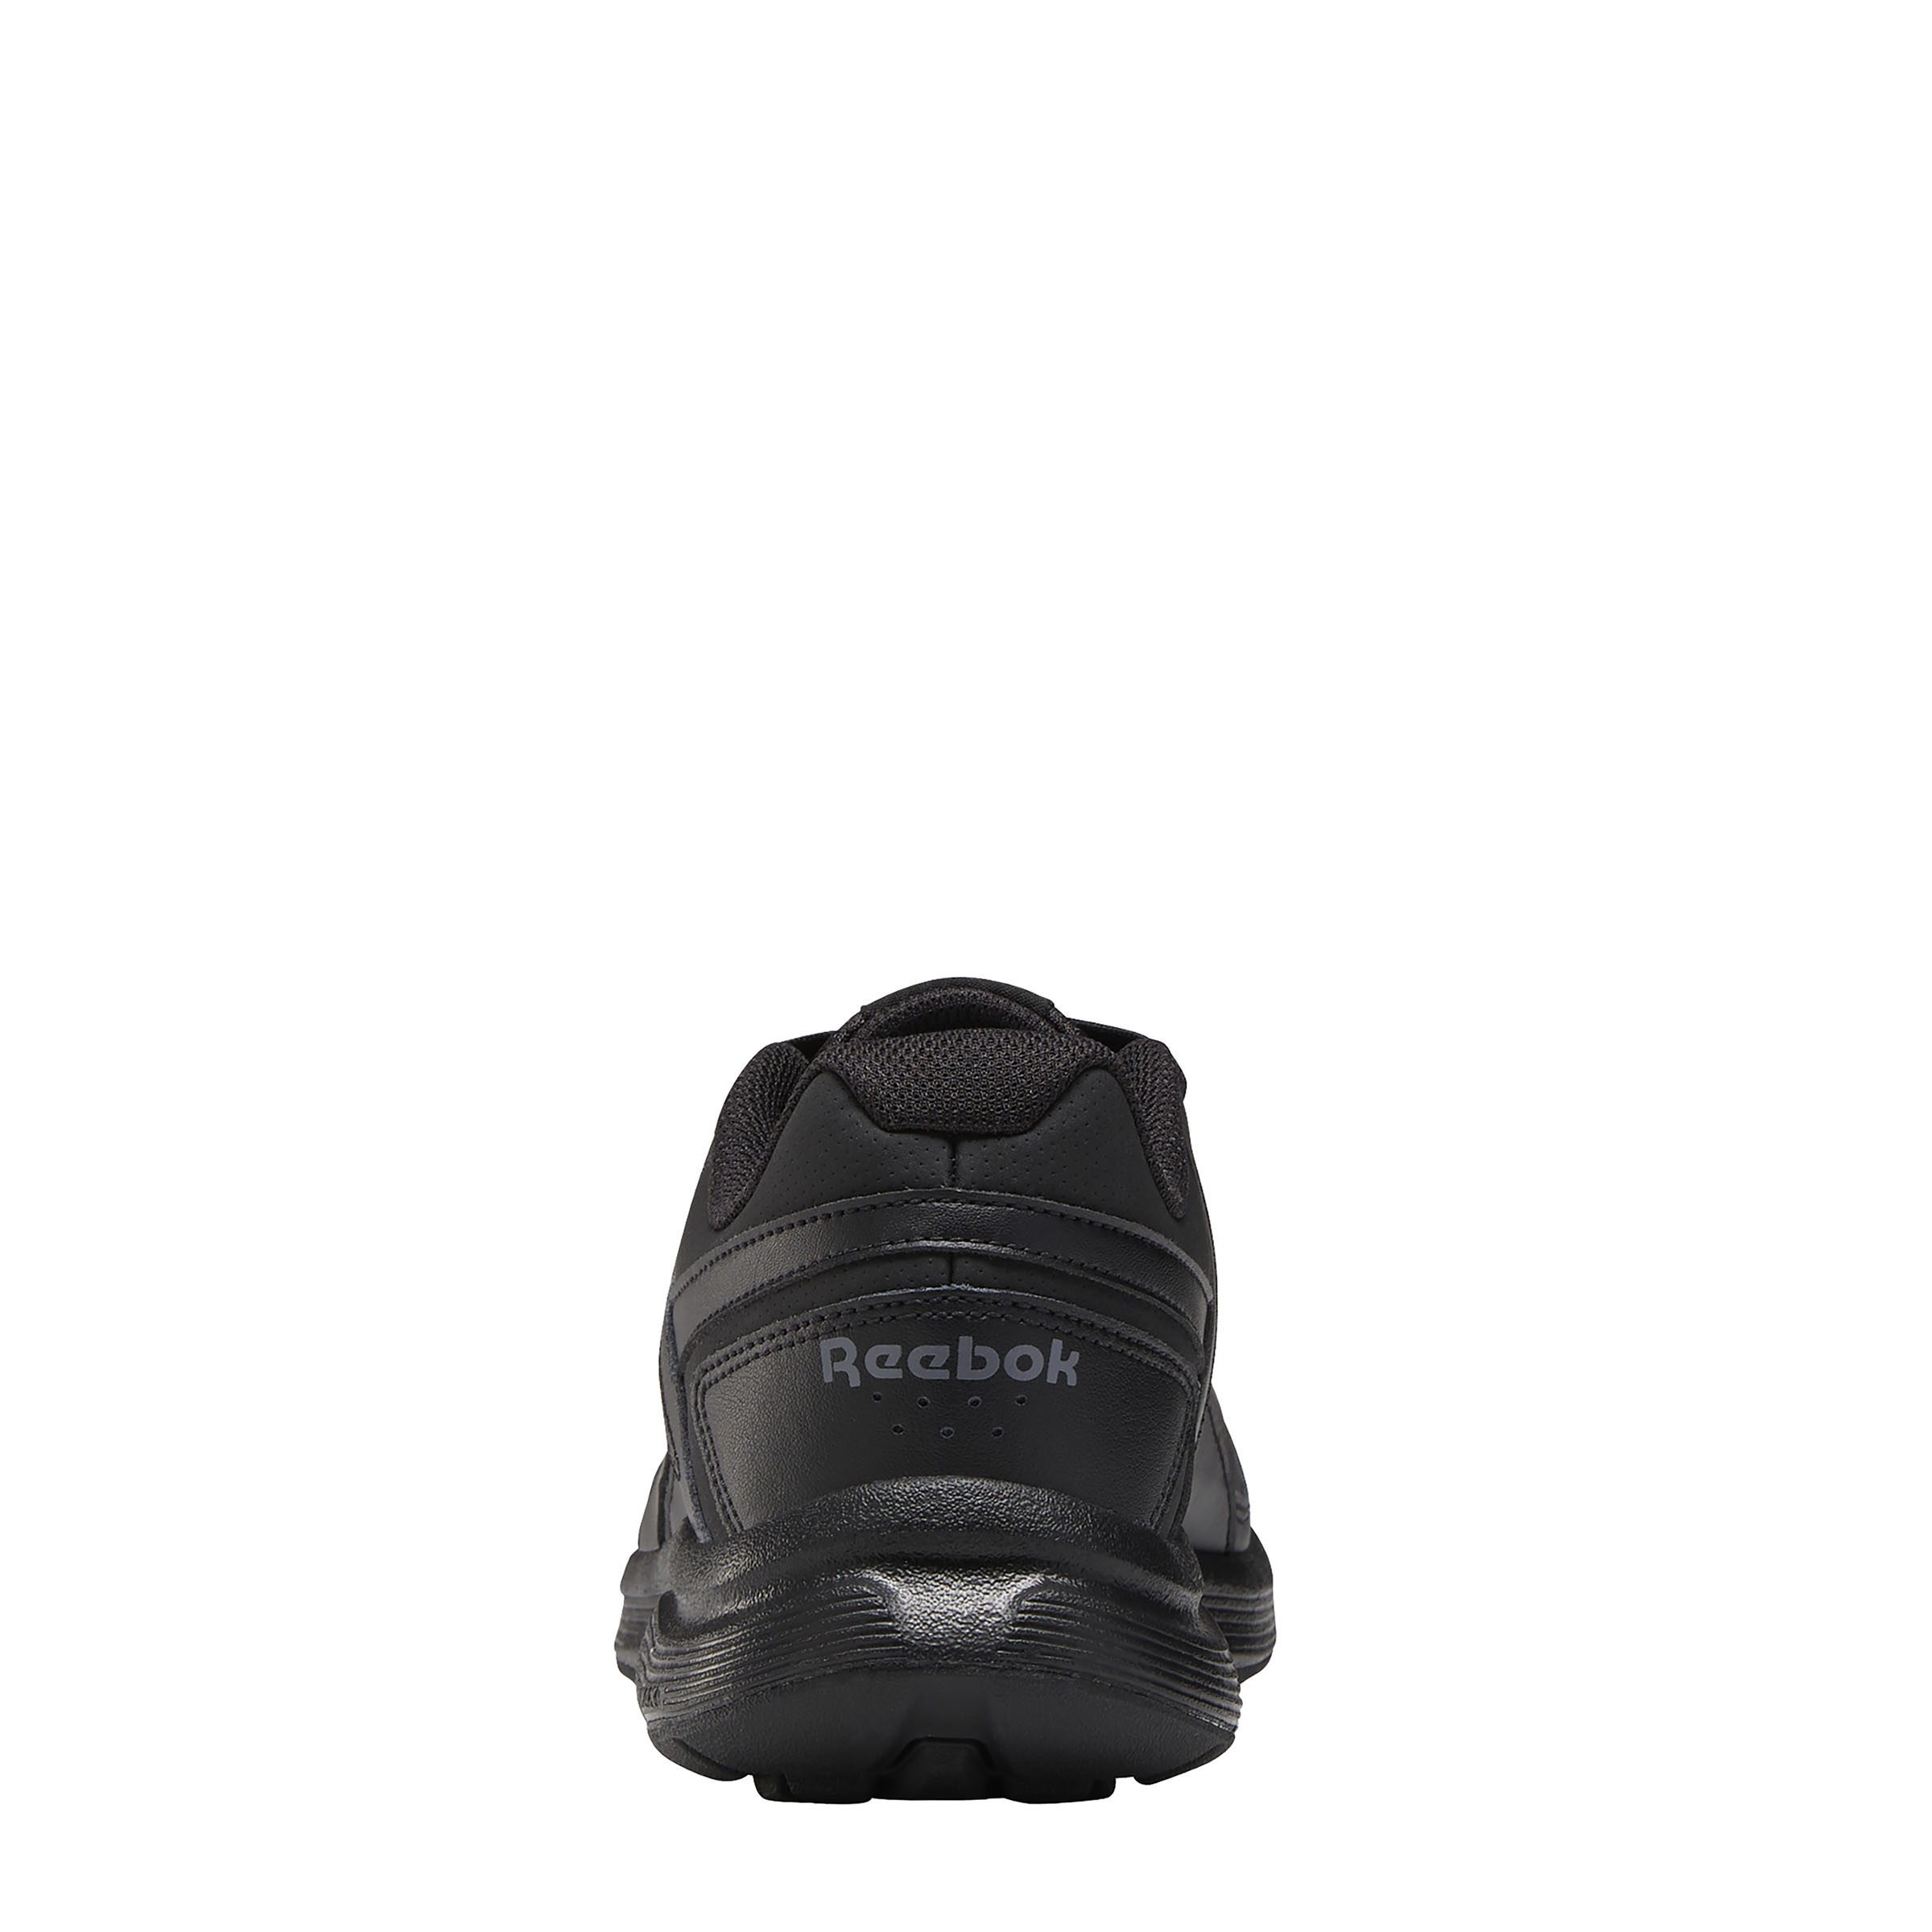 Reebok Men's BB4500 X-Wide High Top Sneaker